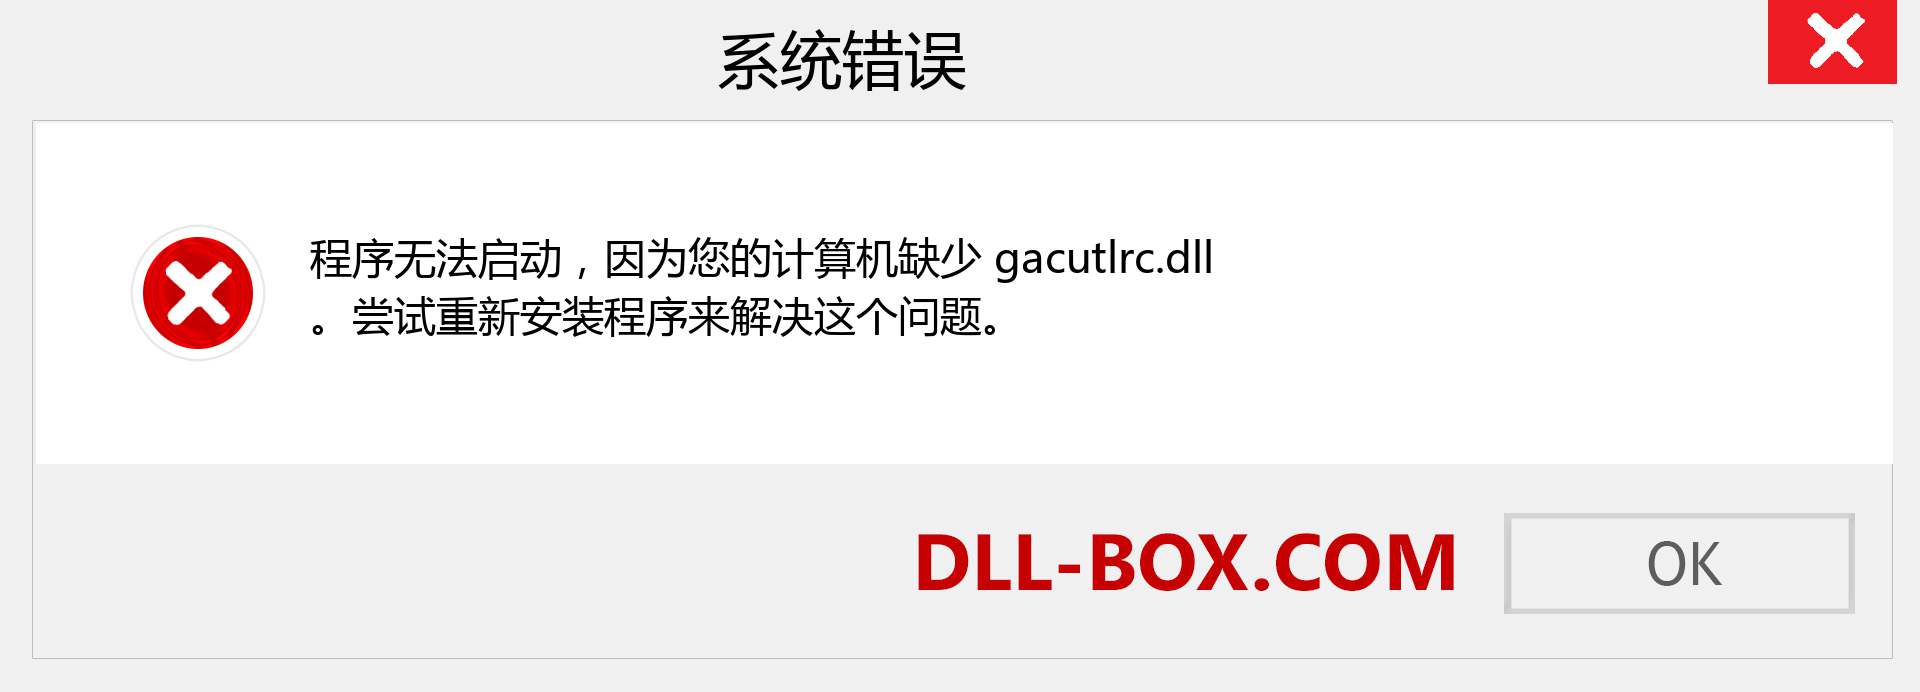 gacutlrc.dll 文件丢失？。 适用于 Windows 7、8、10 的下载 - 修复 Windows、照片、图像上的 gacutlrc dll 丢失错误